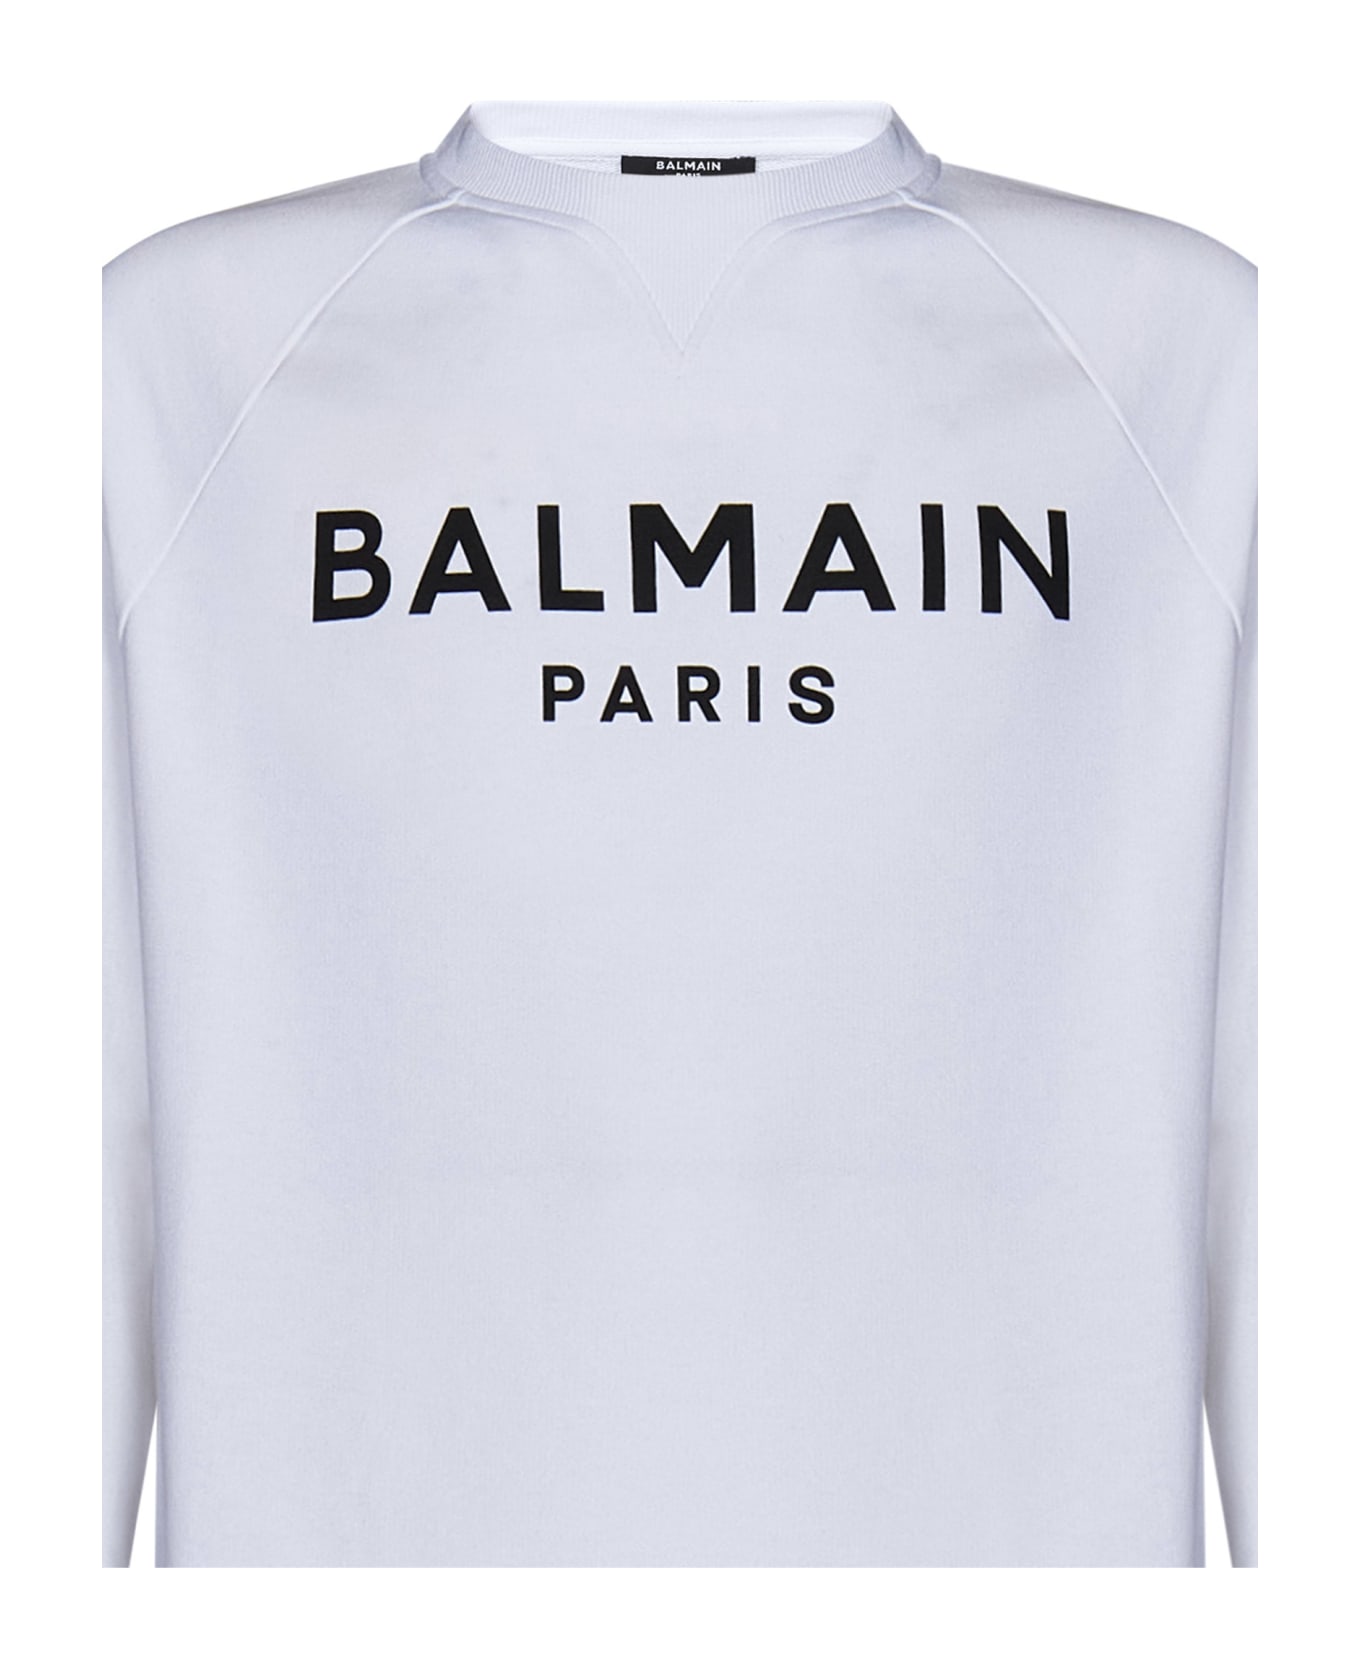 Balmain Paris  Paris Sweatshirt - White